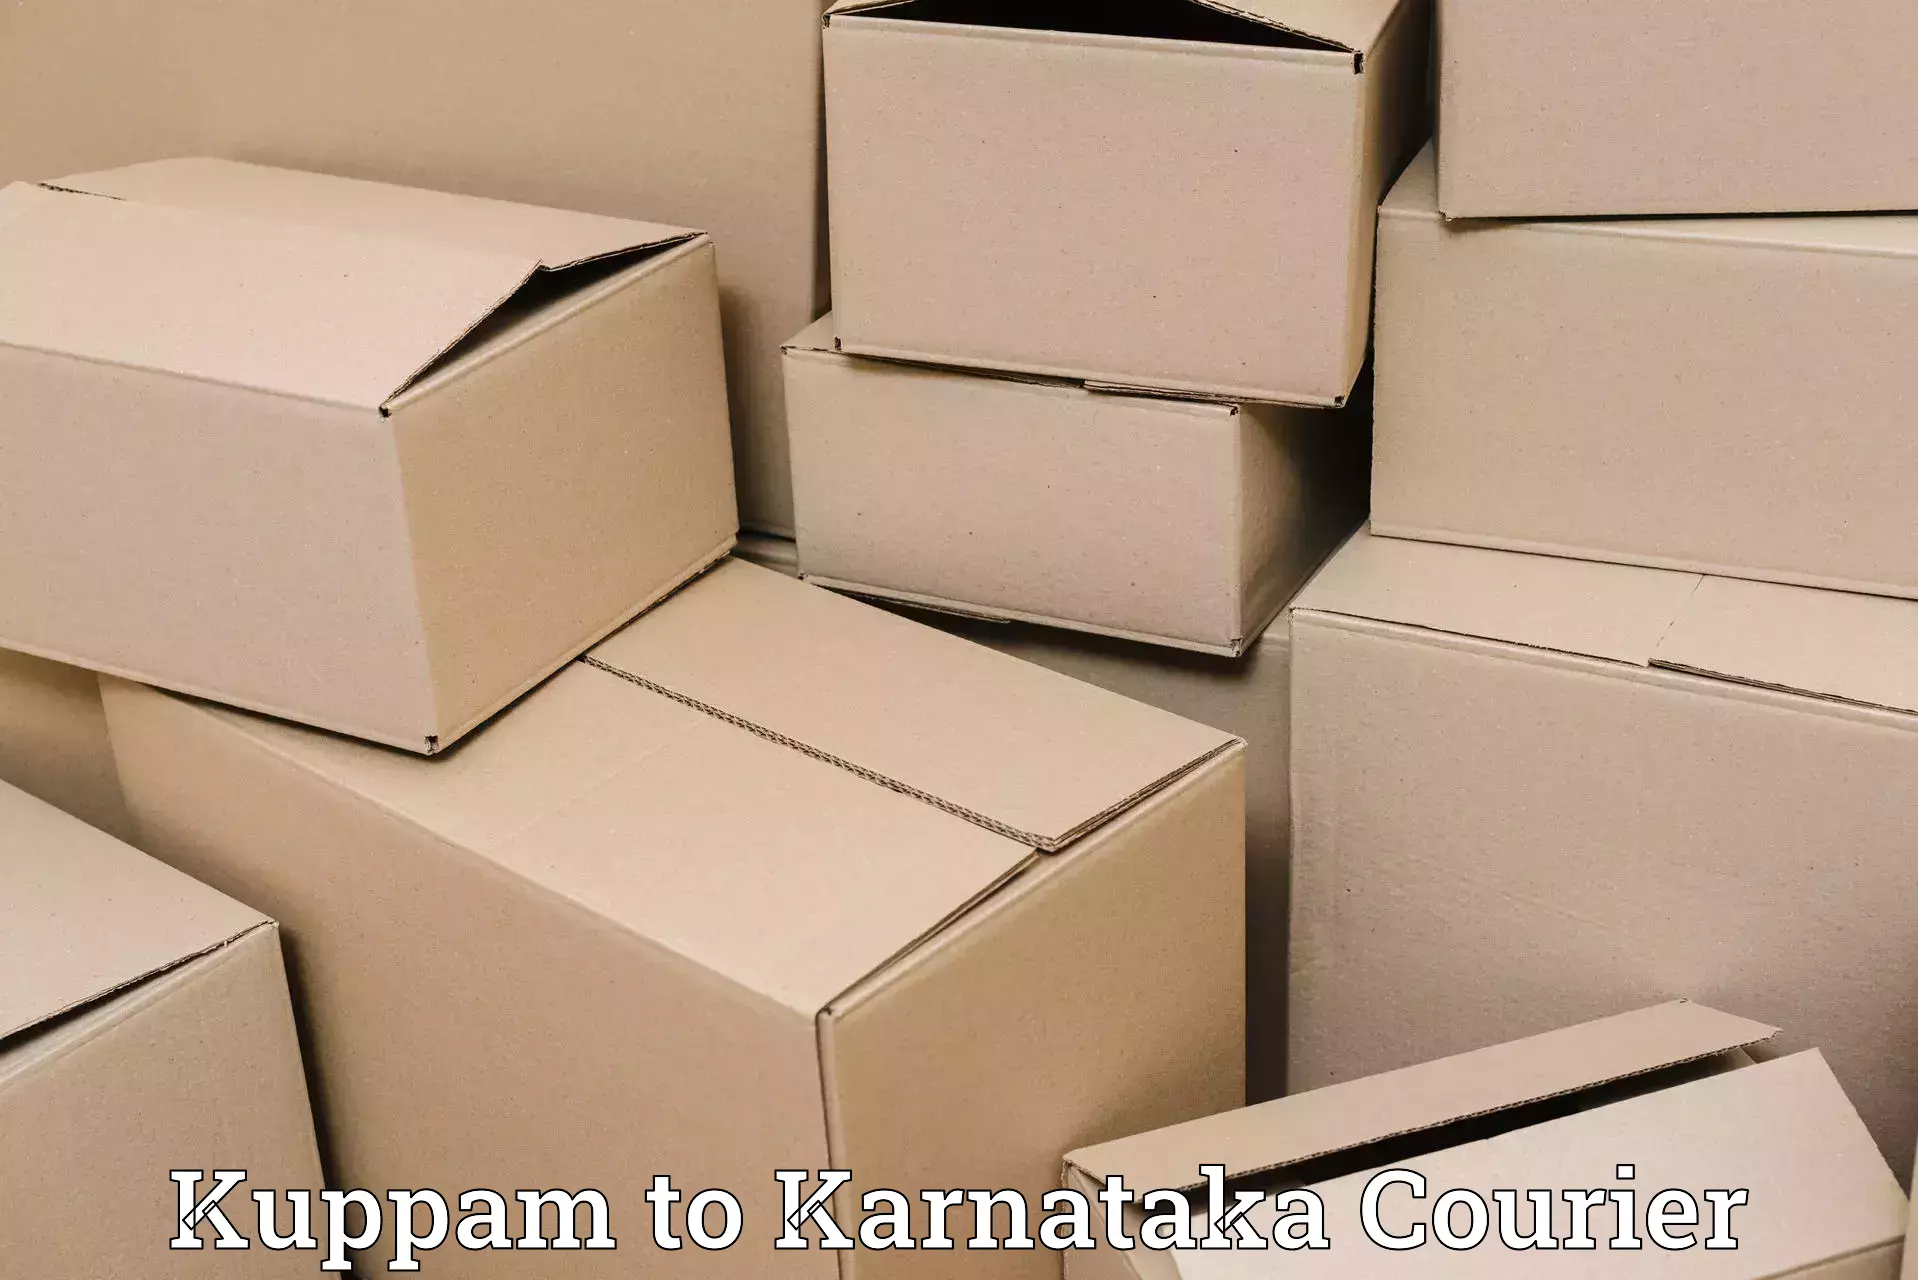 Efficient order fulfillment in Kuppam to Mundgod